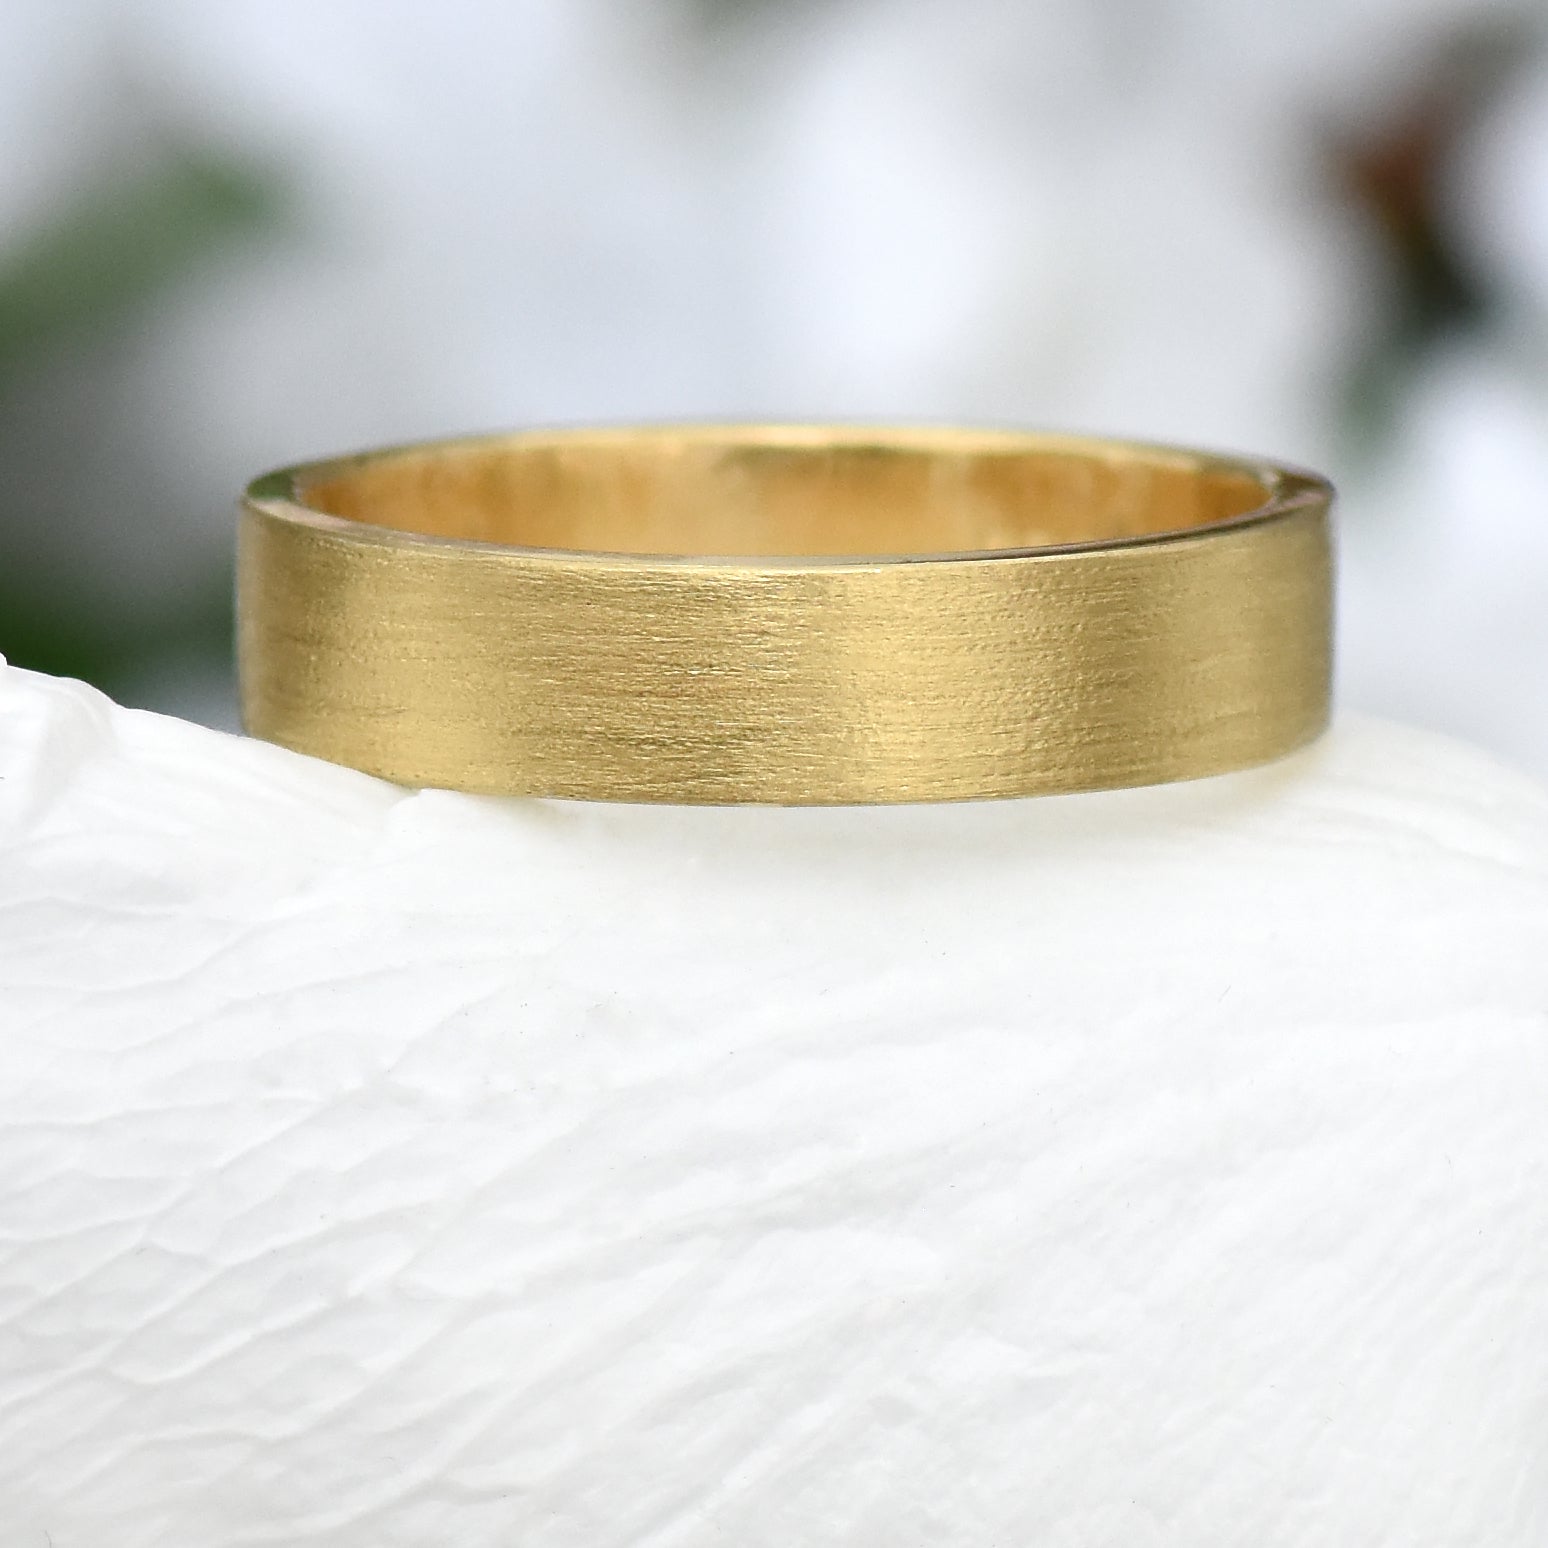 5mm flat wedding ring in gold